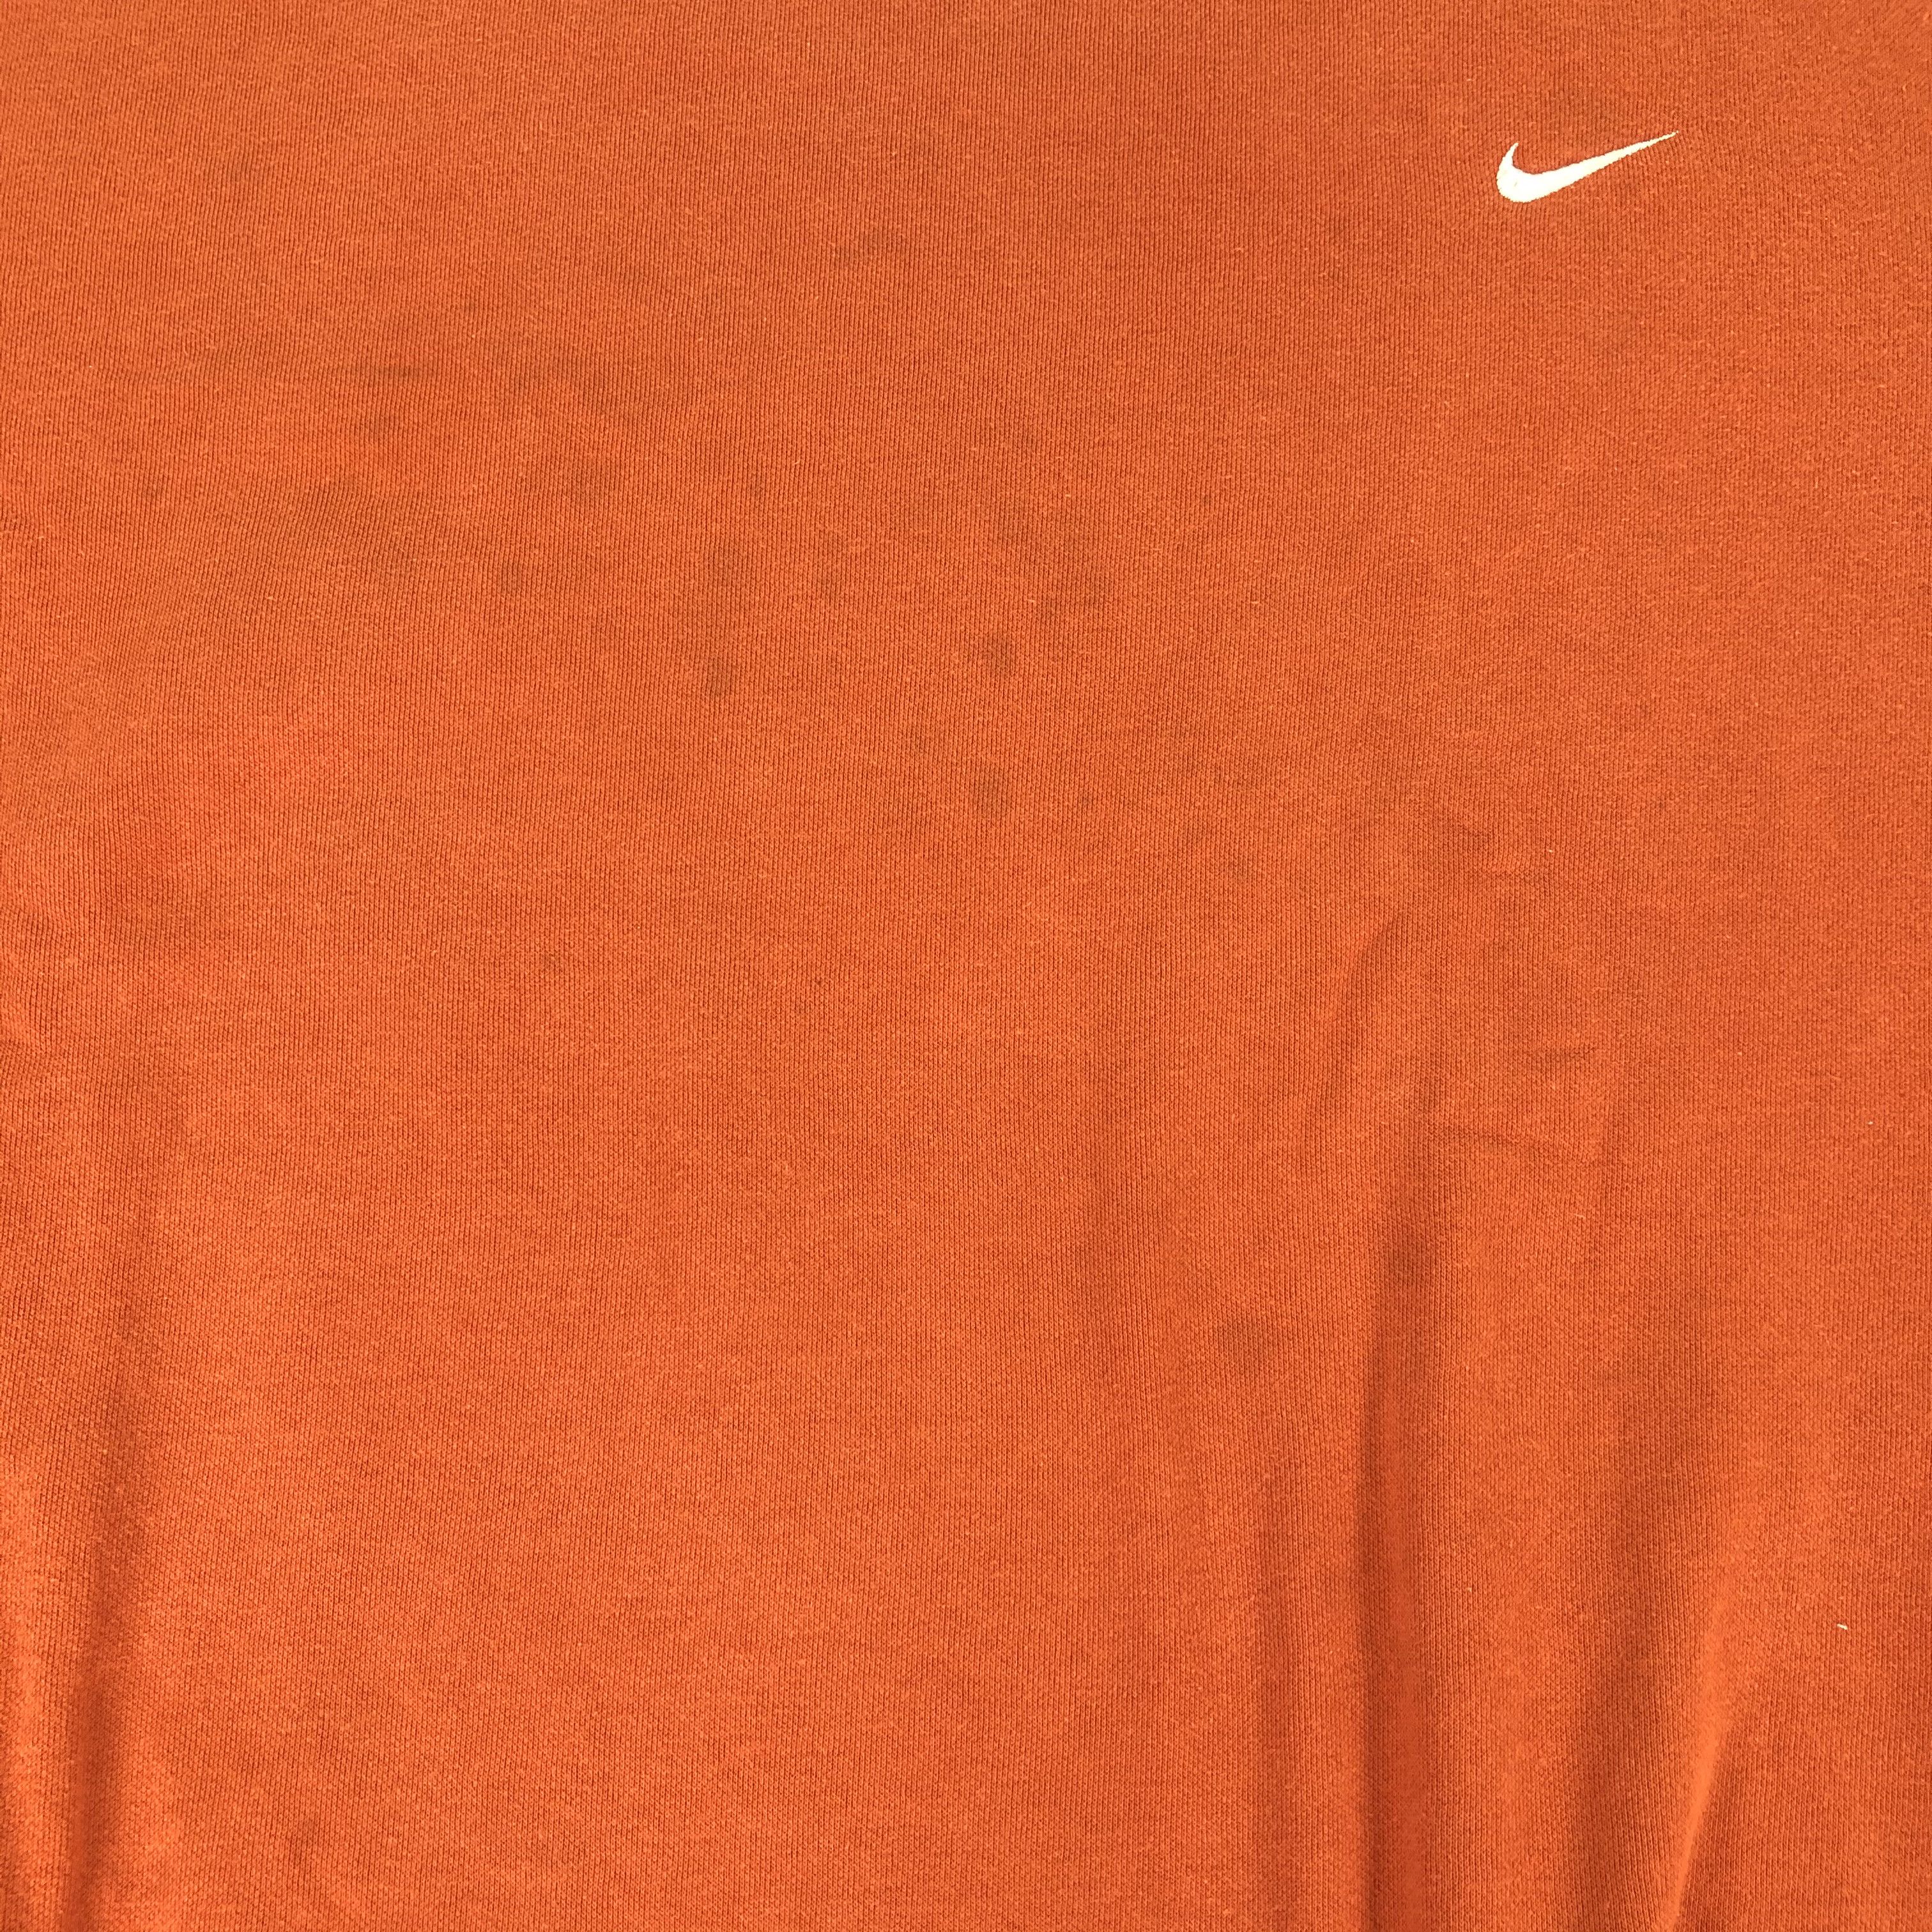 Nike Nike Sweatshirt Logo Pull Over Orange Colour Size US XXL / EU 58 / 5 - 6 Thumbnail